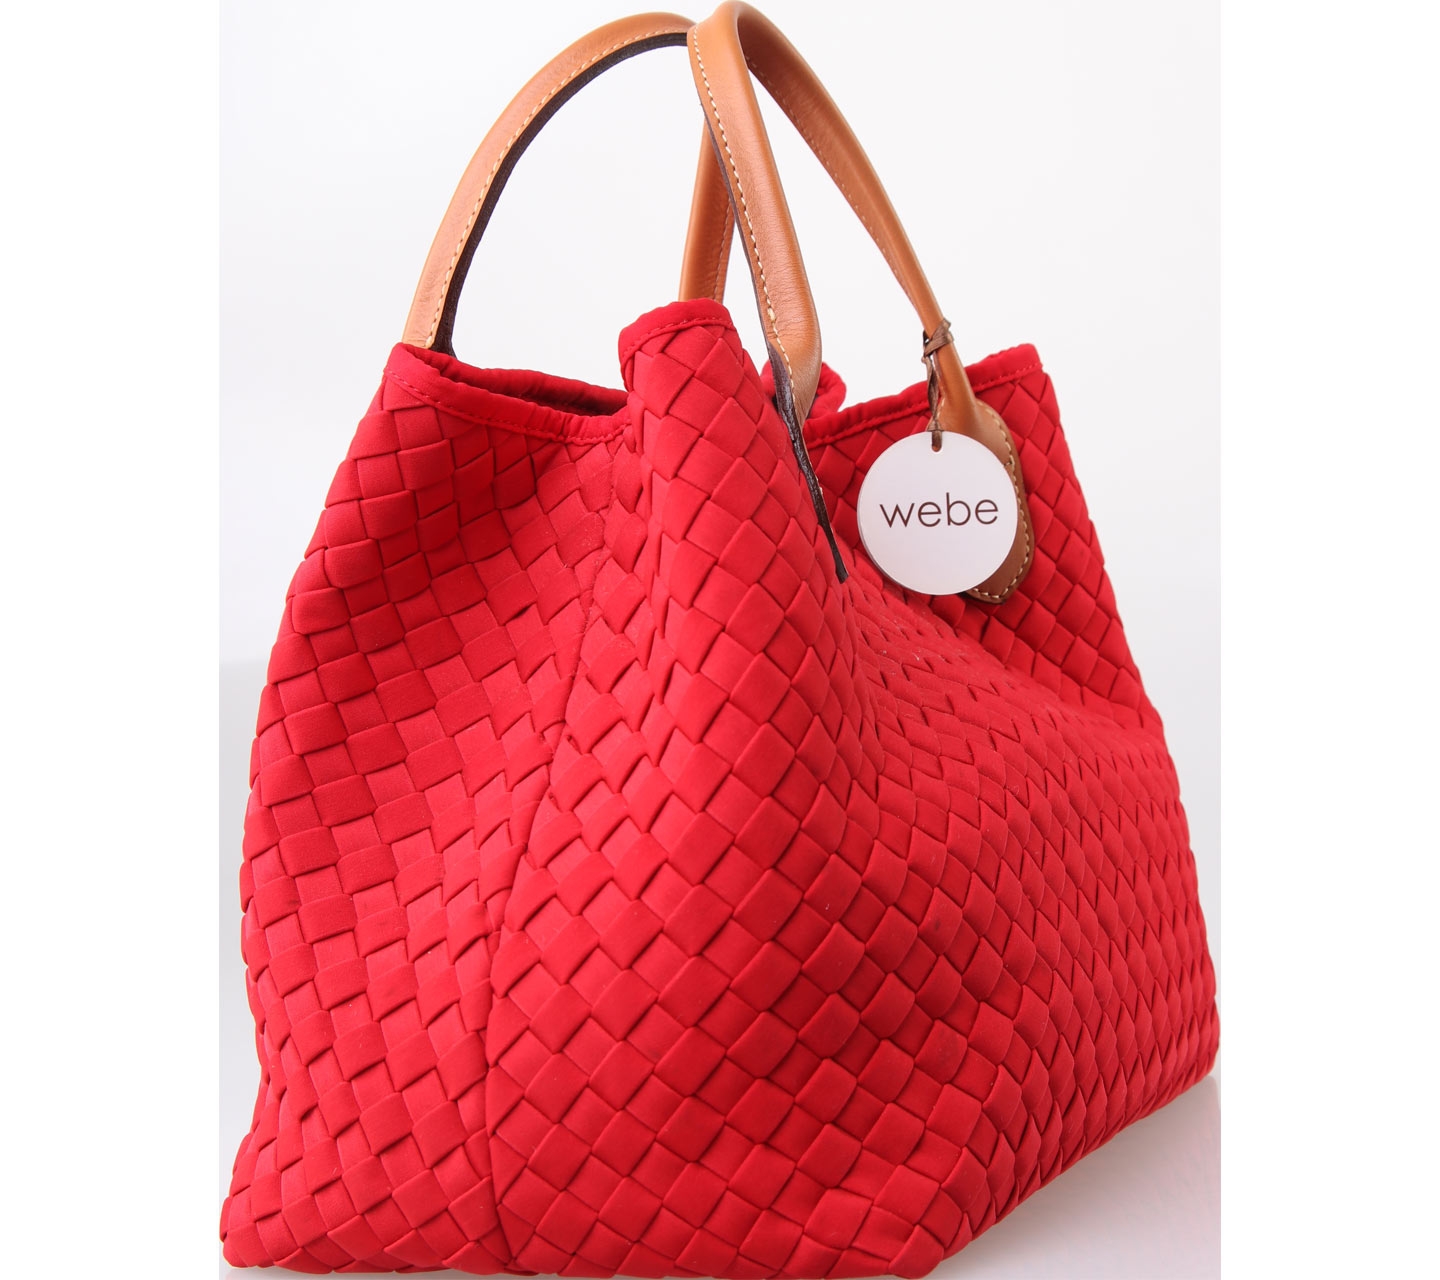 Webe Red Handbag